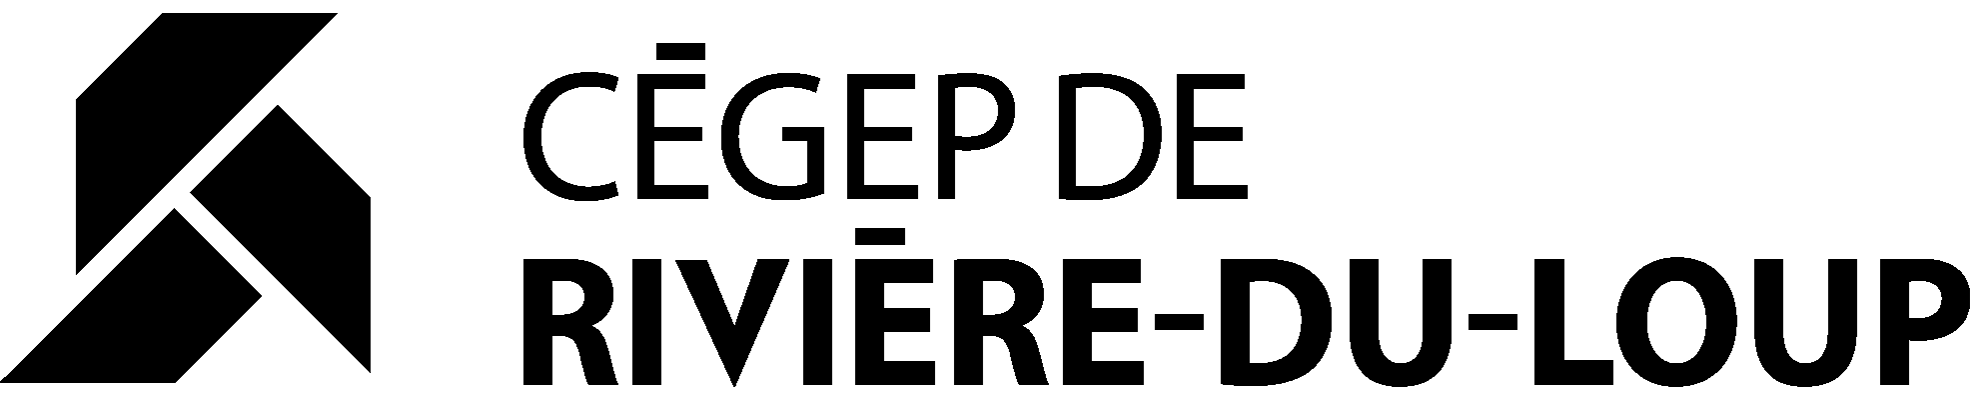 Cegep Riviere-du-Loup logo